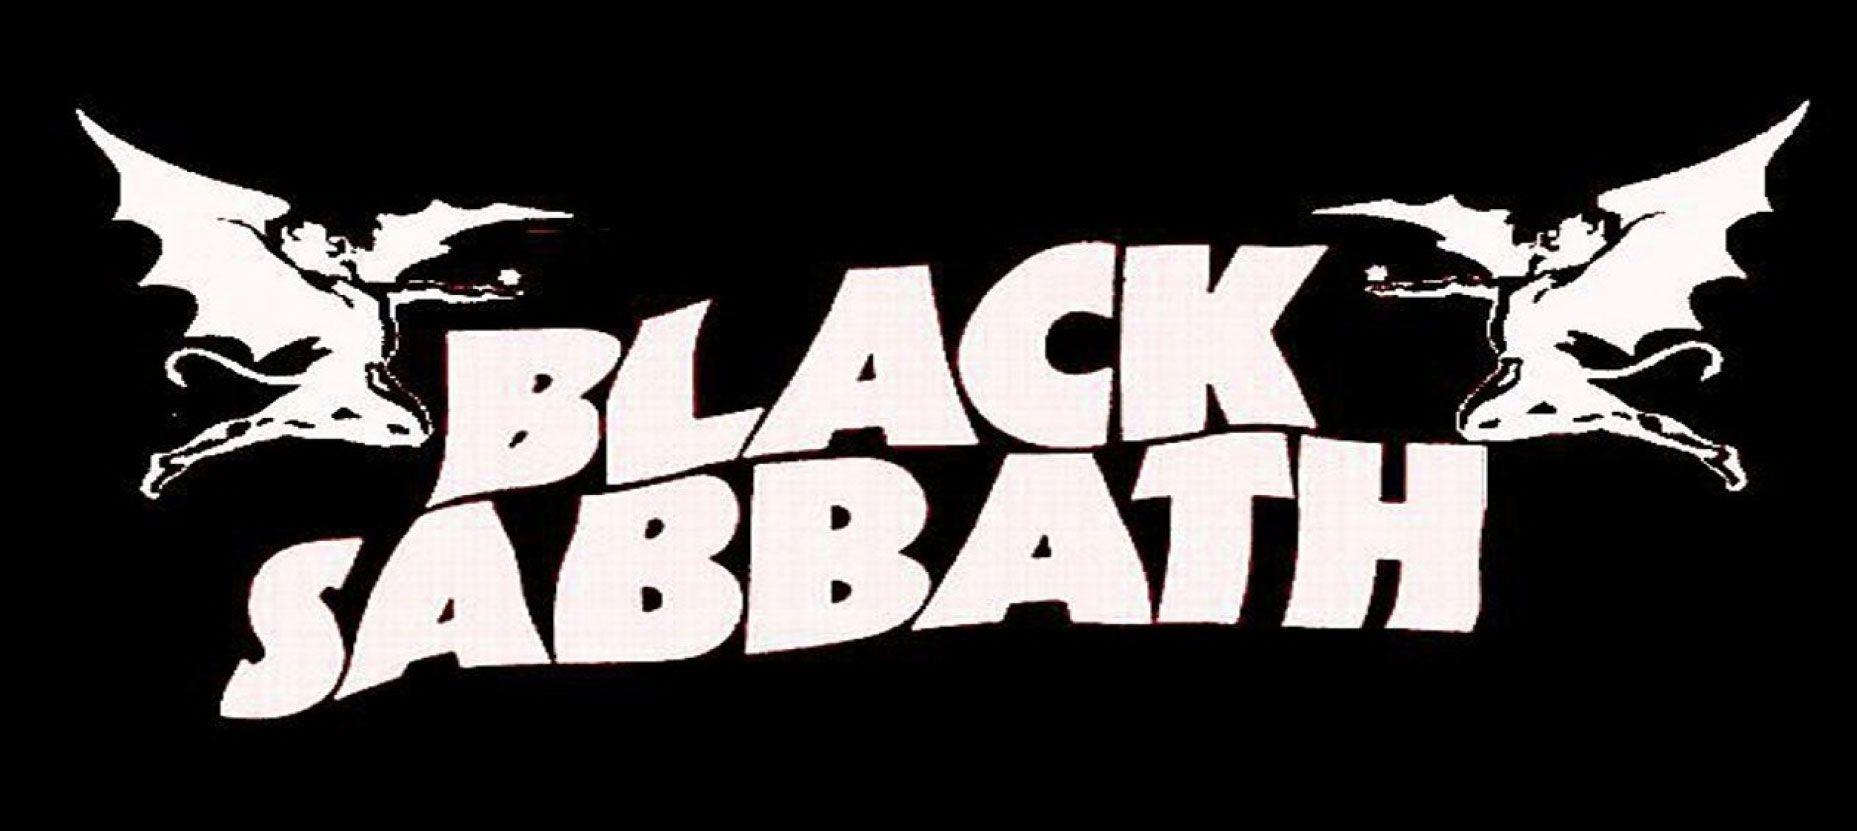 bon jovi logo black sabbath logo